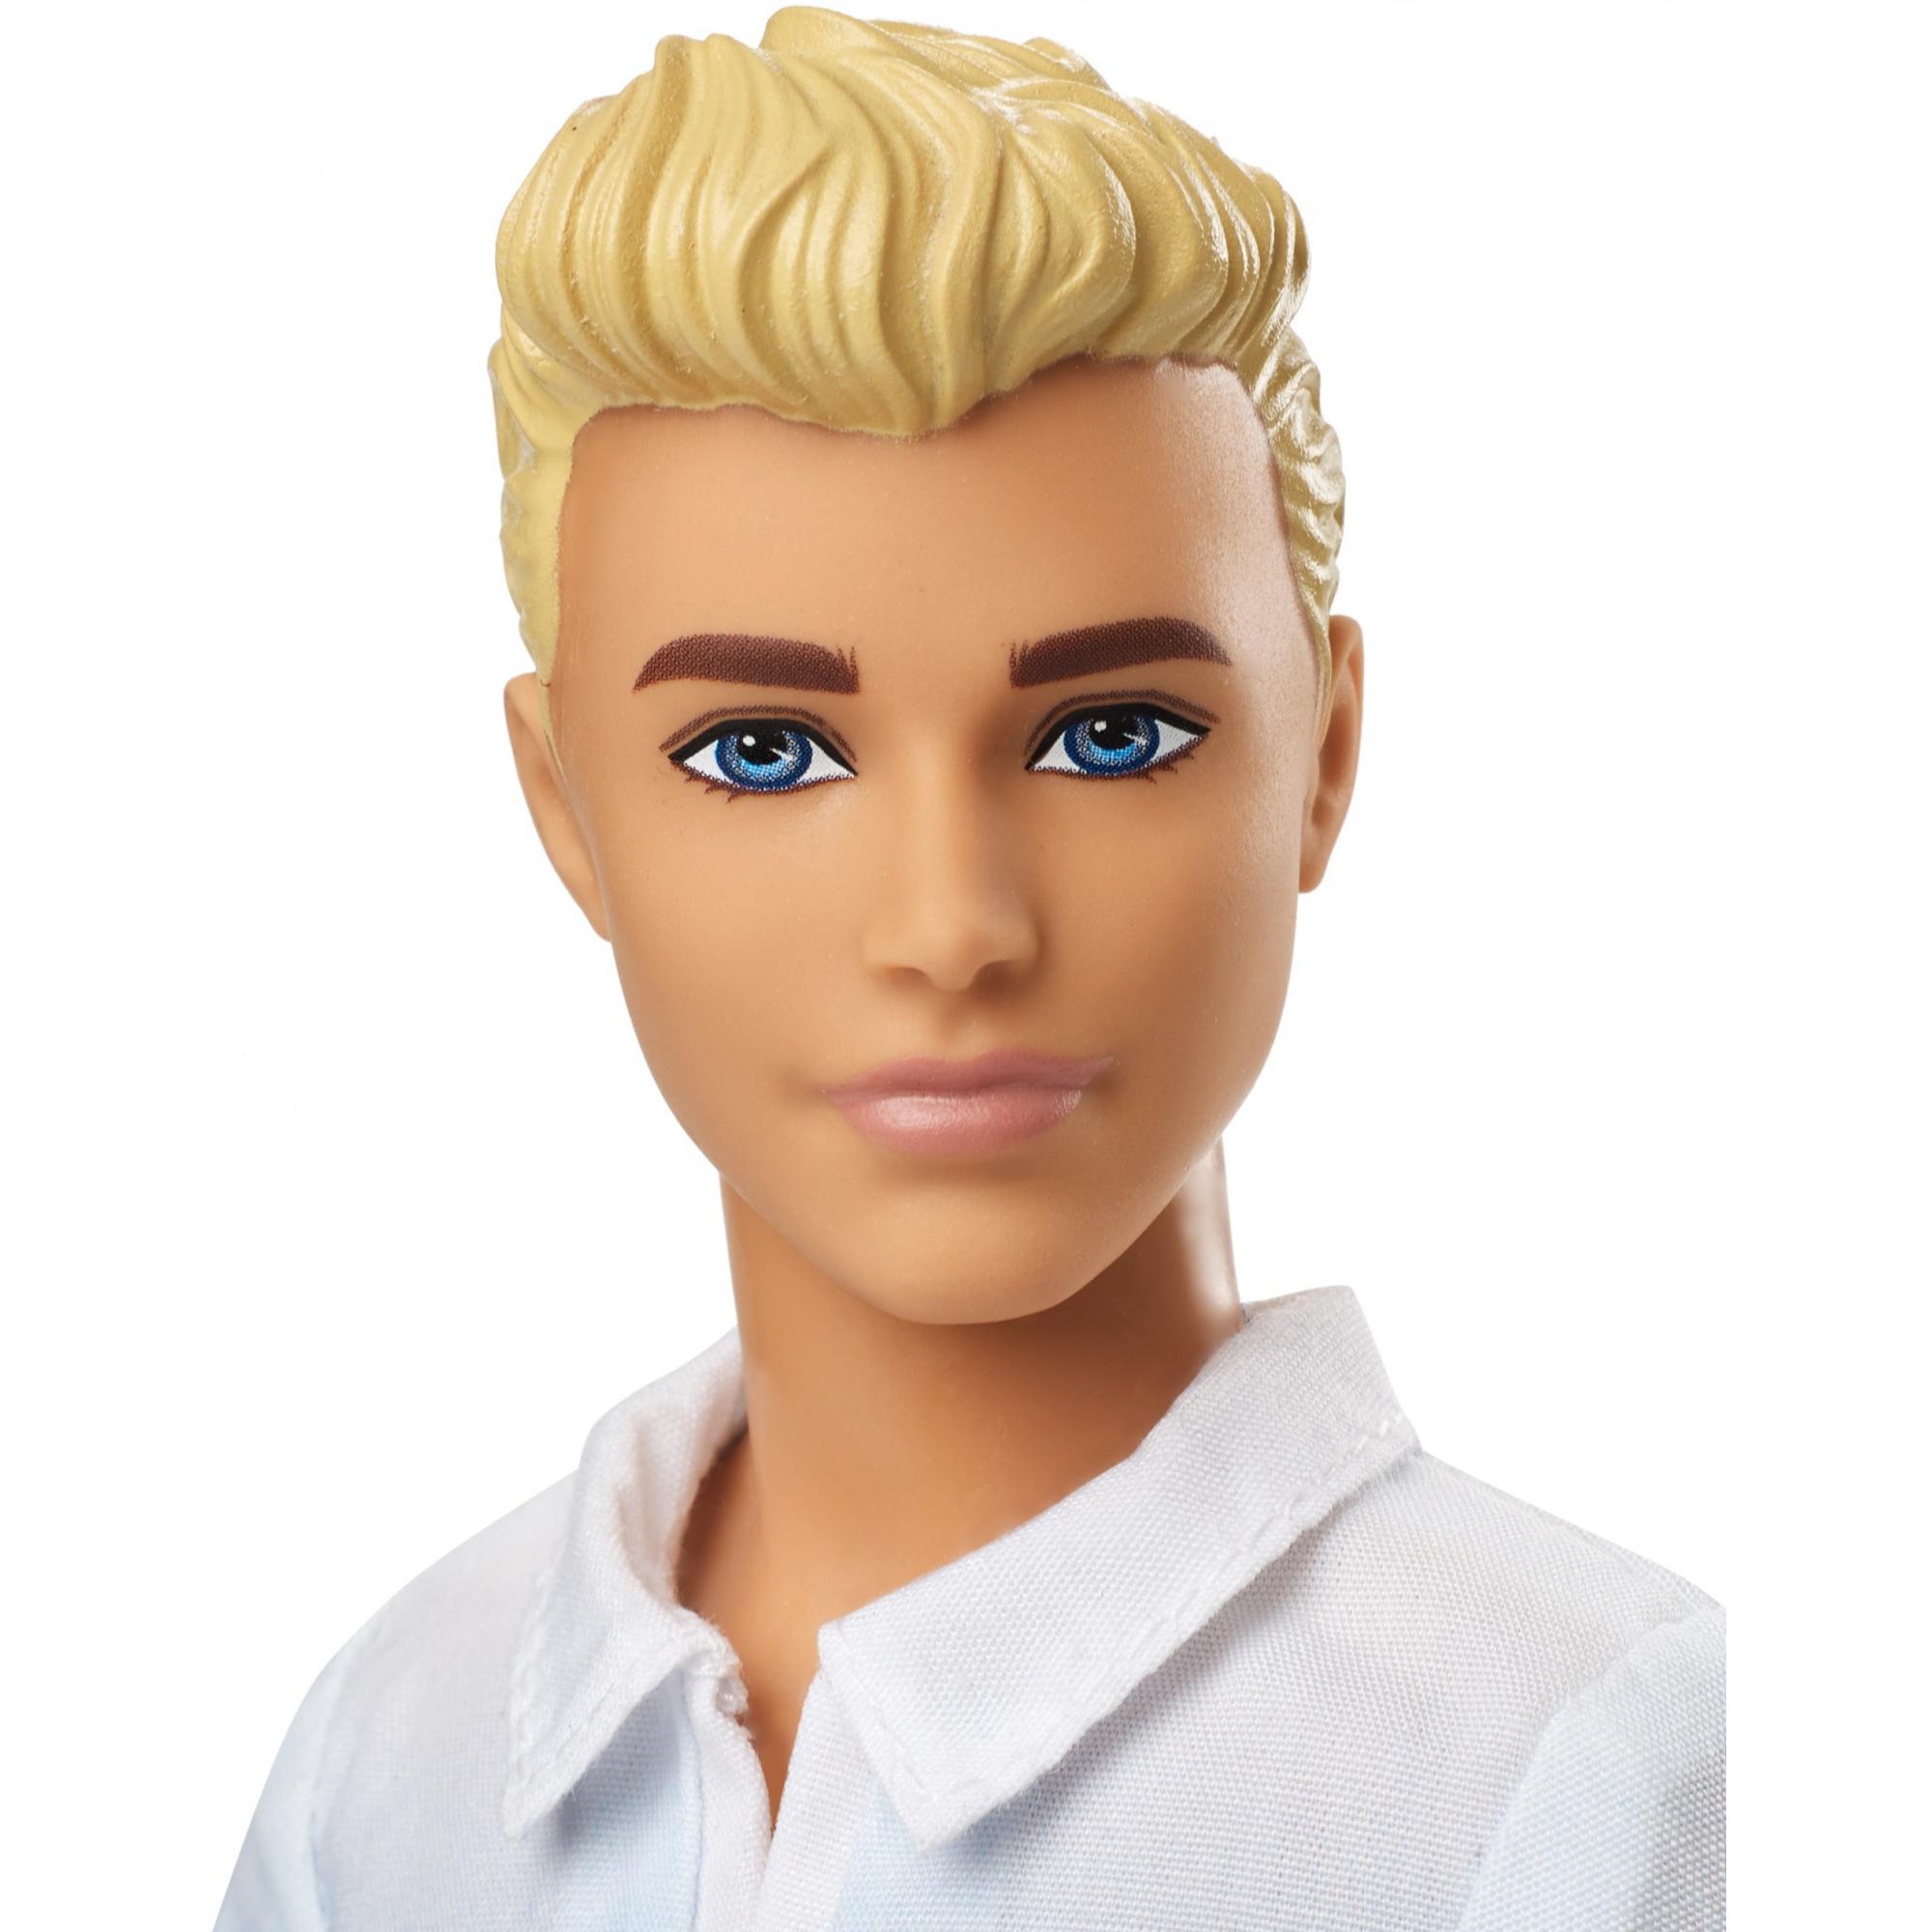 Barbie Ken Fashionistas Doll, Blonde Wearing Blue Ombre Shirt - image 3 of 6